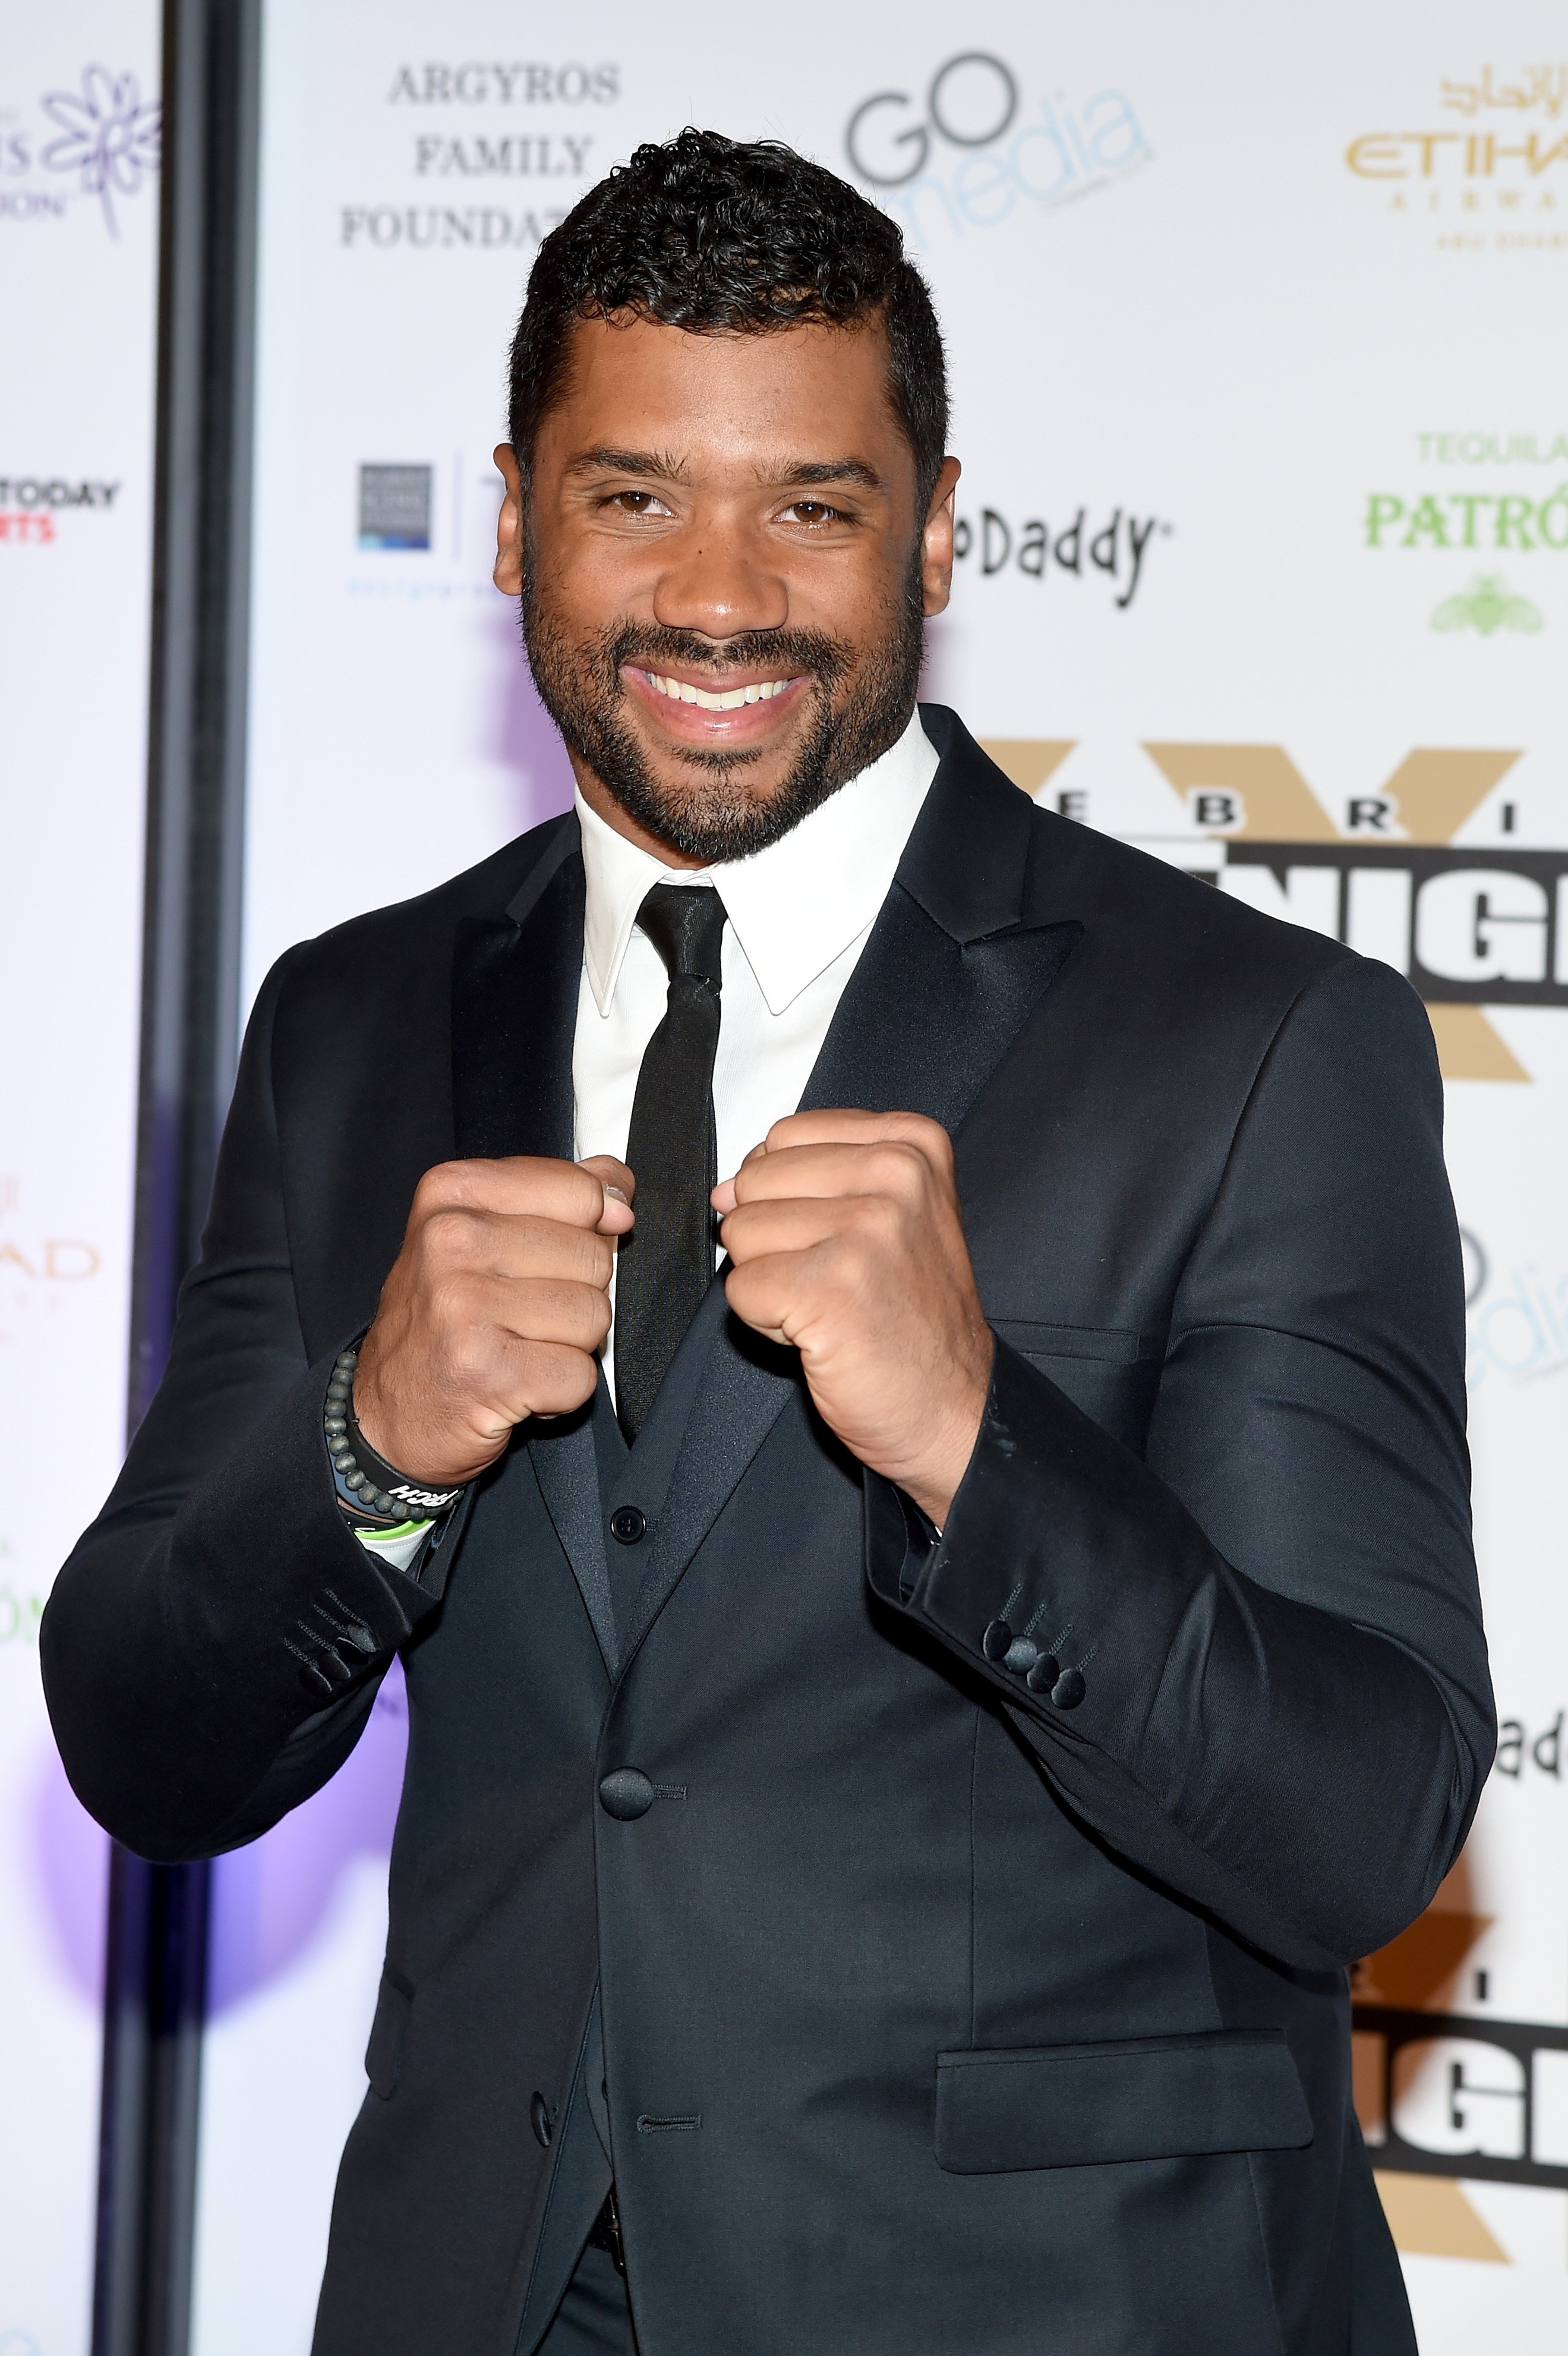  Russell Wilson at Muhammad Ali's Celebrity Fight Night XXI at the JW Marriott Phoenix Desert Ridge Resort & Spa on March 28, 2015 in Phoenix, Arizona.|Source: Getty Images